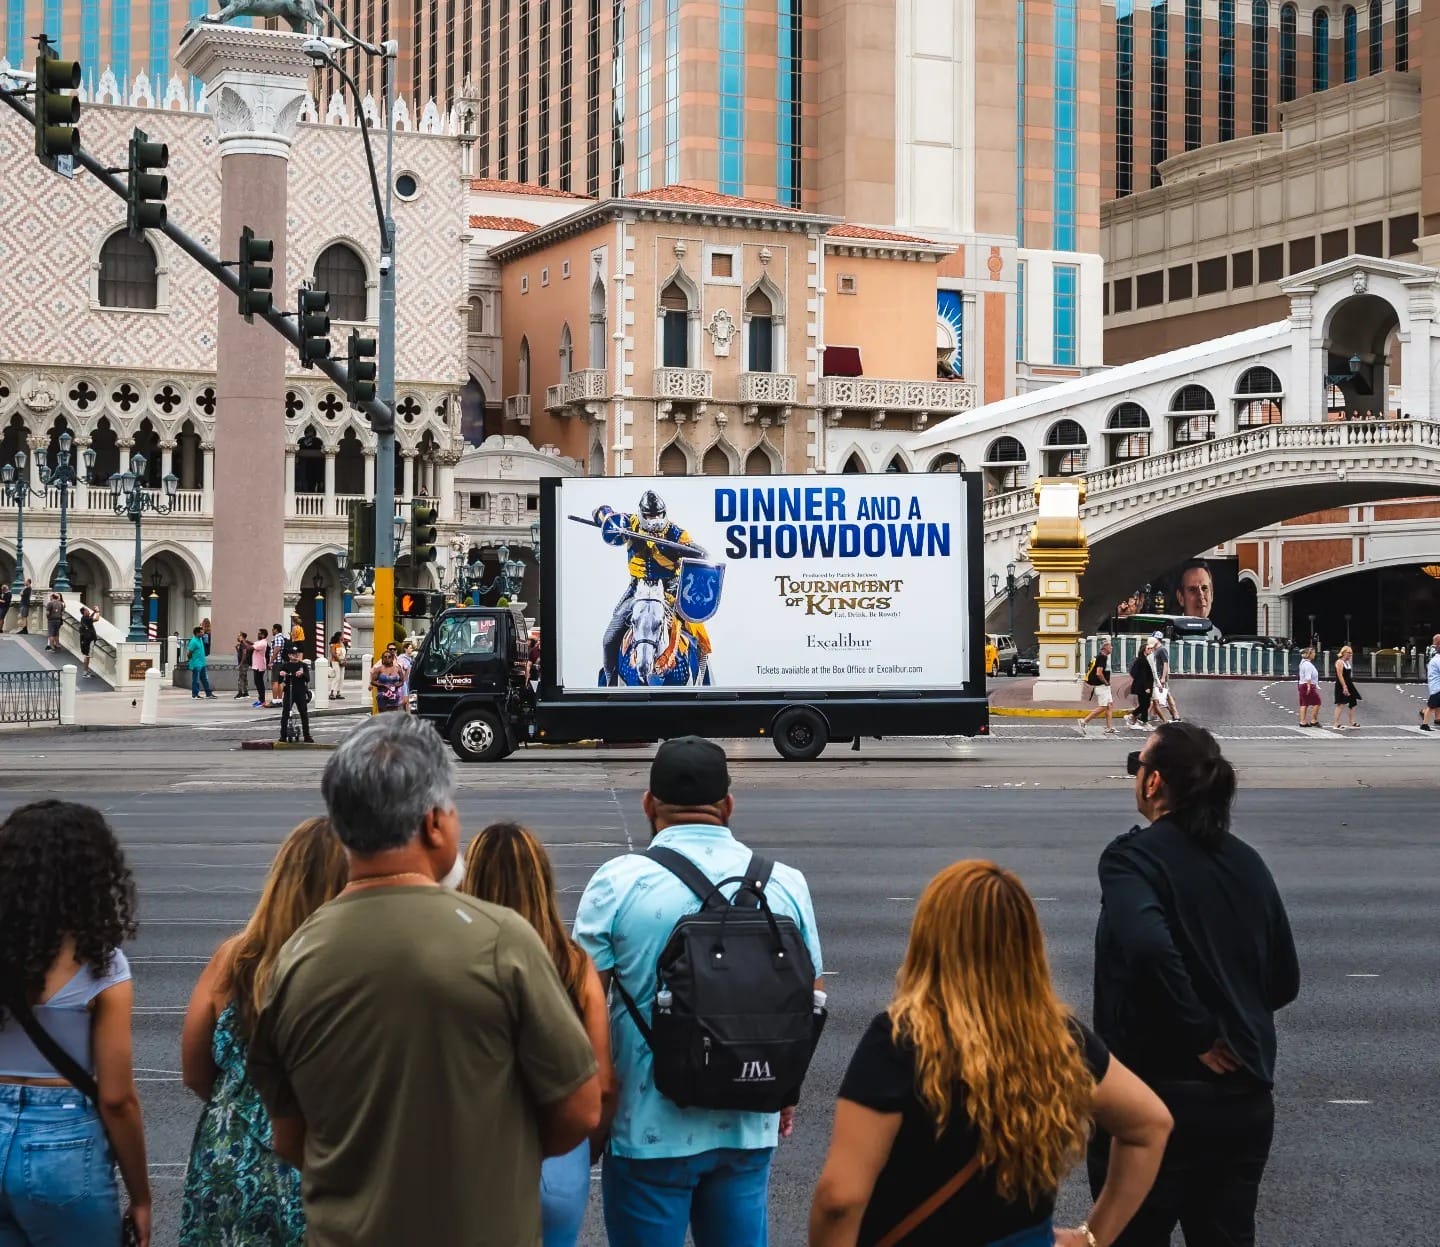 Billboard advertising Medieval show and dinner in Las Vegas.